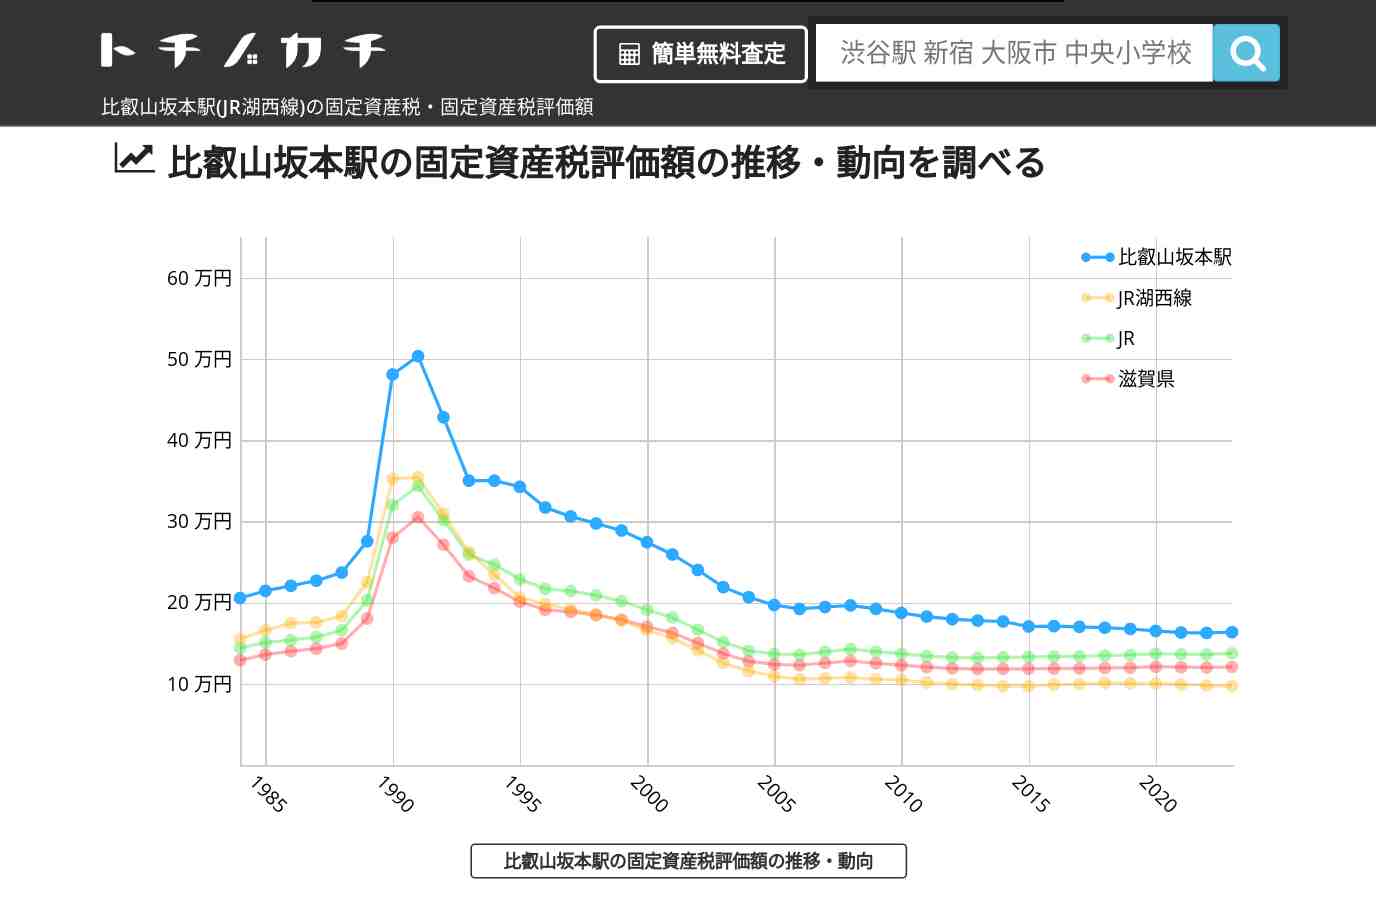 比叡山坂本駅(JR湖西線)の固定資産税・固定資産税評価額 | トチノカチ